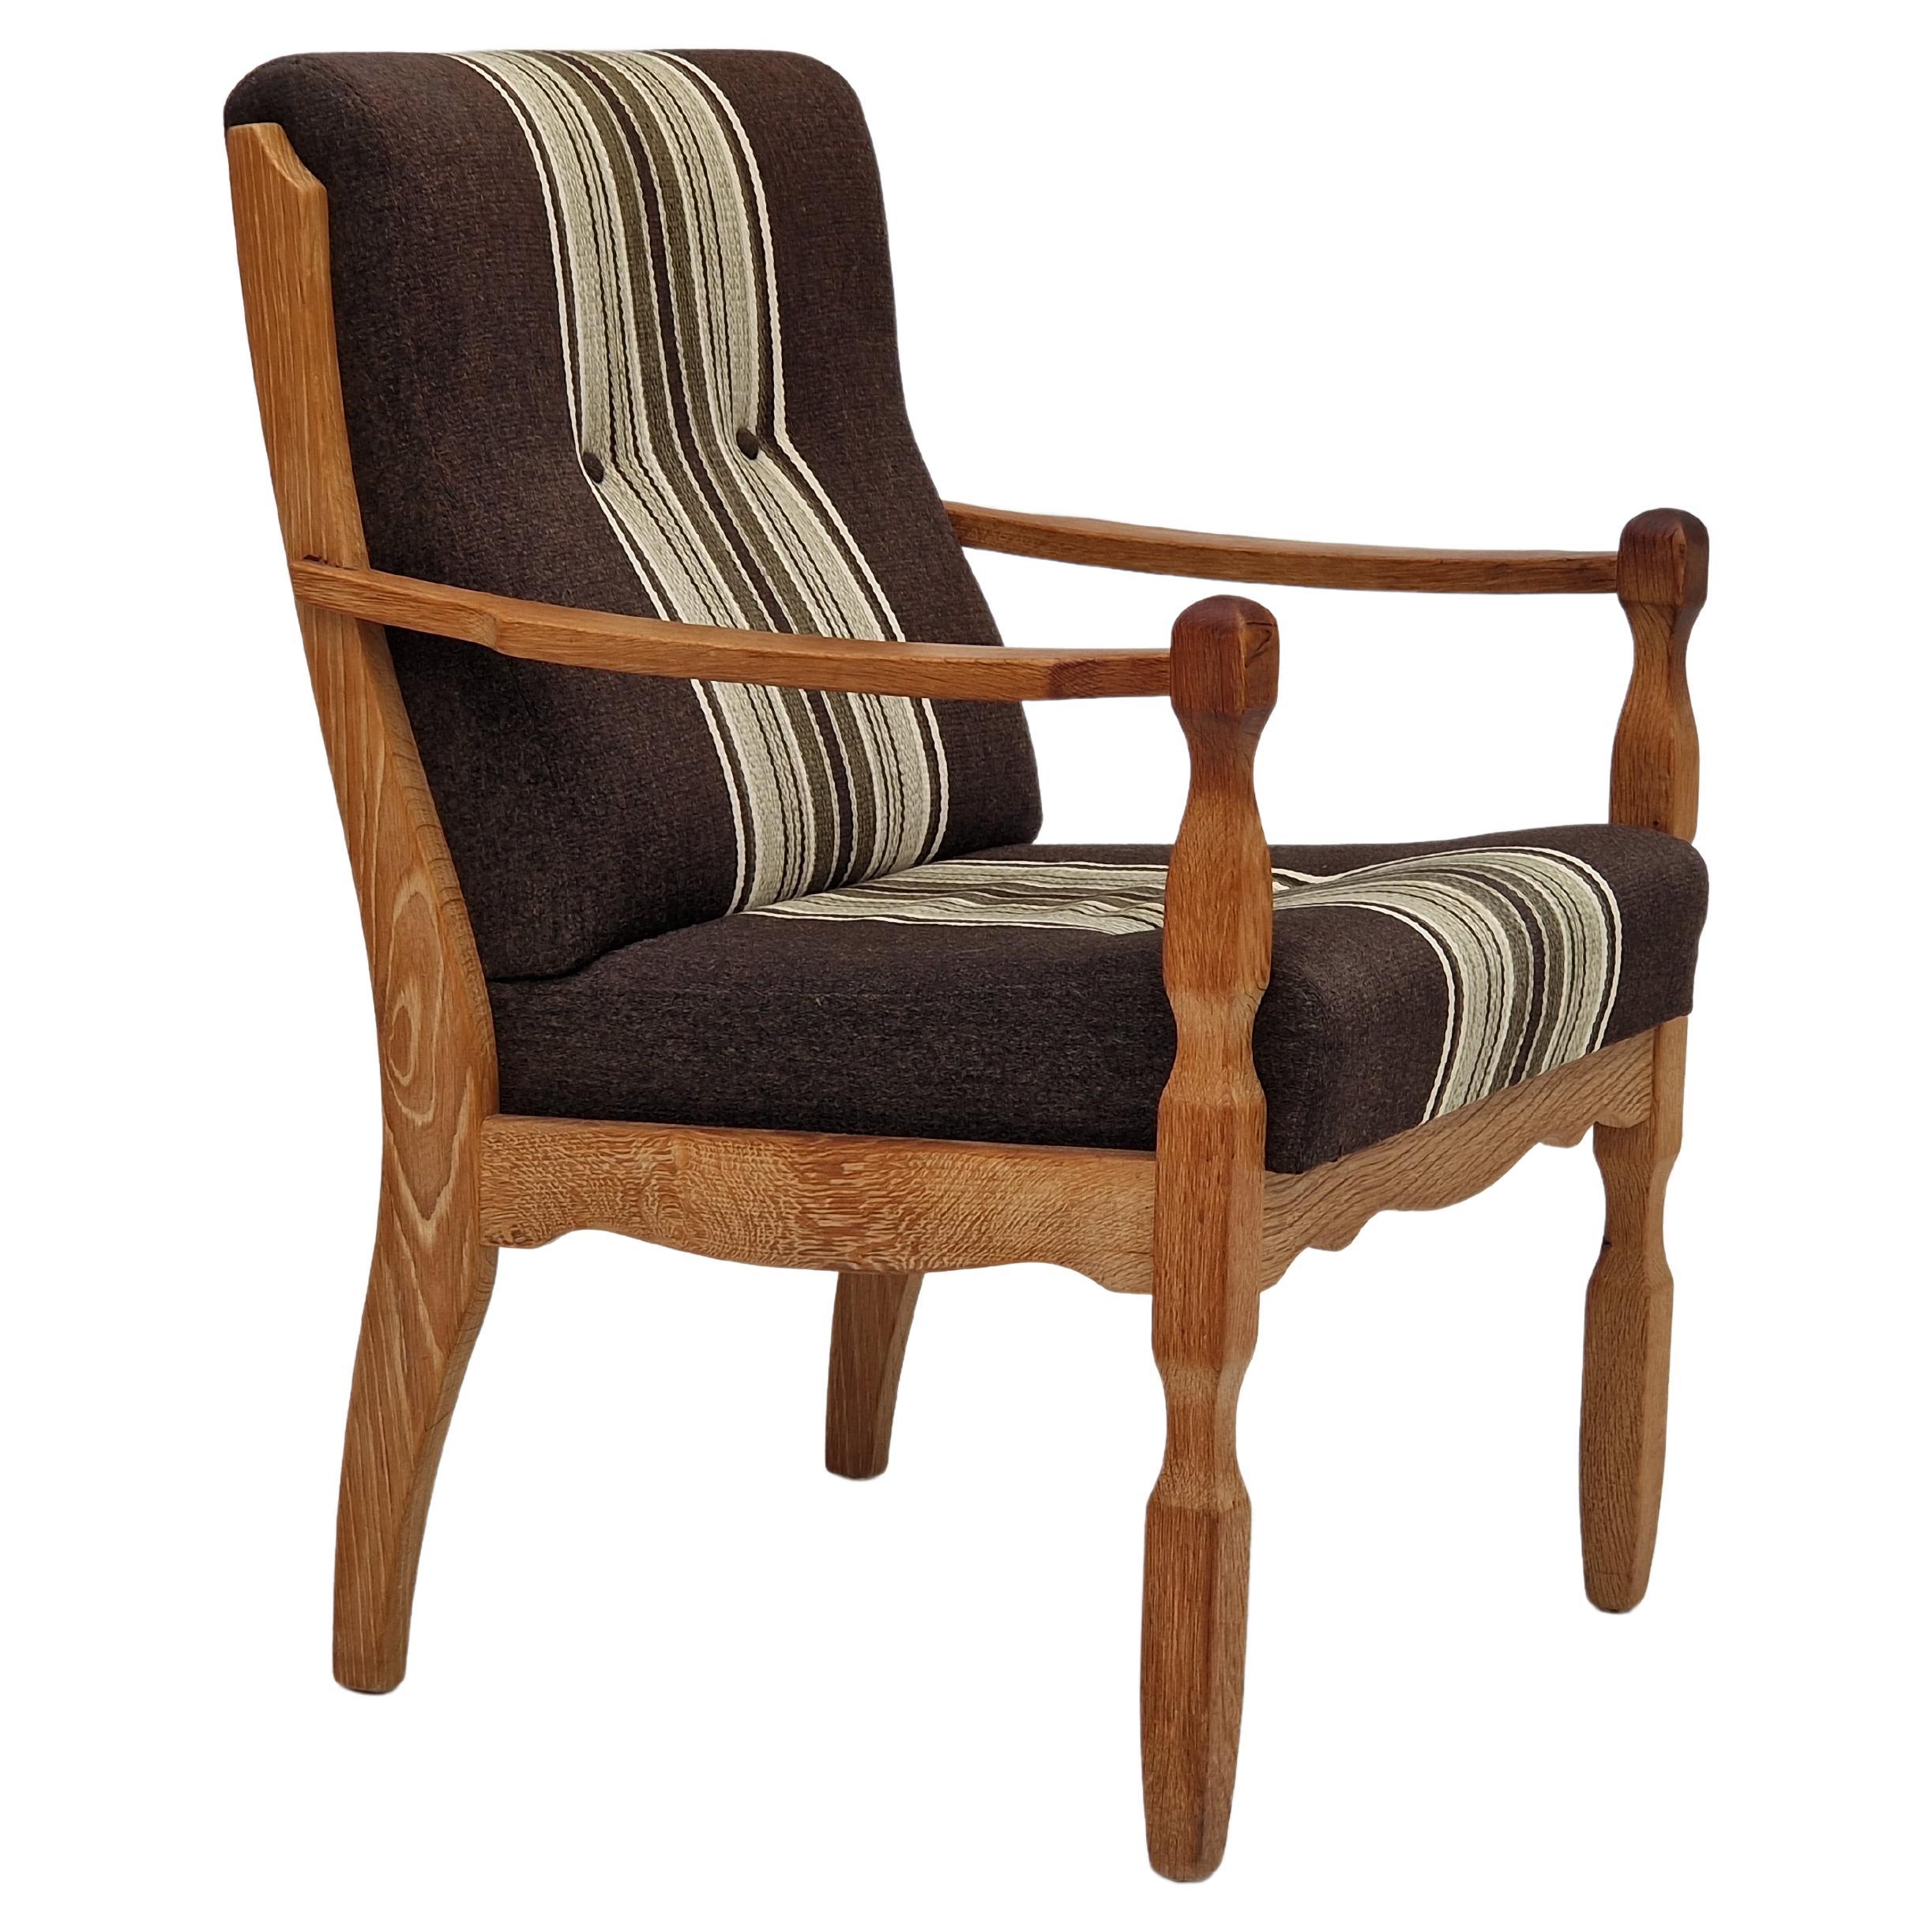 1970s, Danish design, oak wood armchair in furniture wool, oak wood.